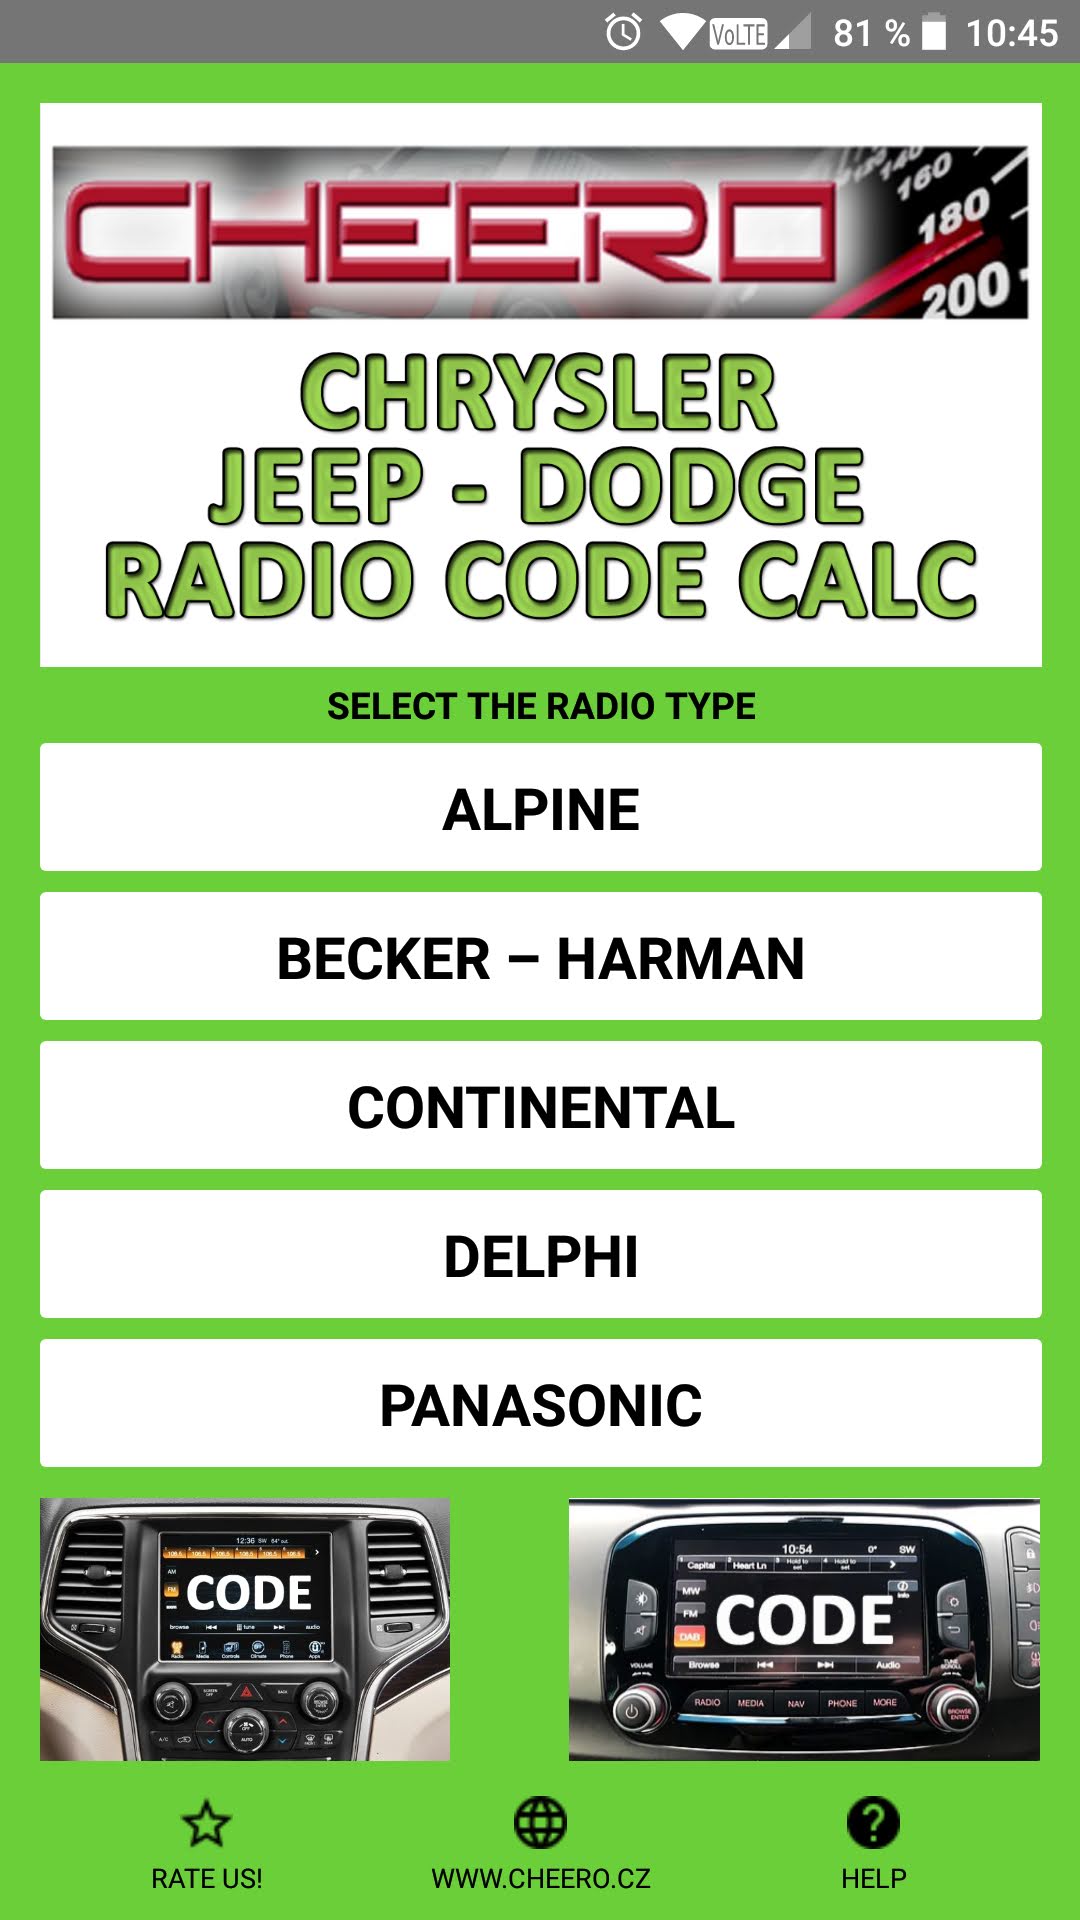 CHRYSLER JEEP DODGE RADIO CODE CALC